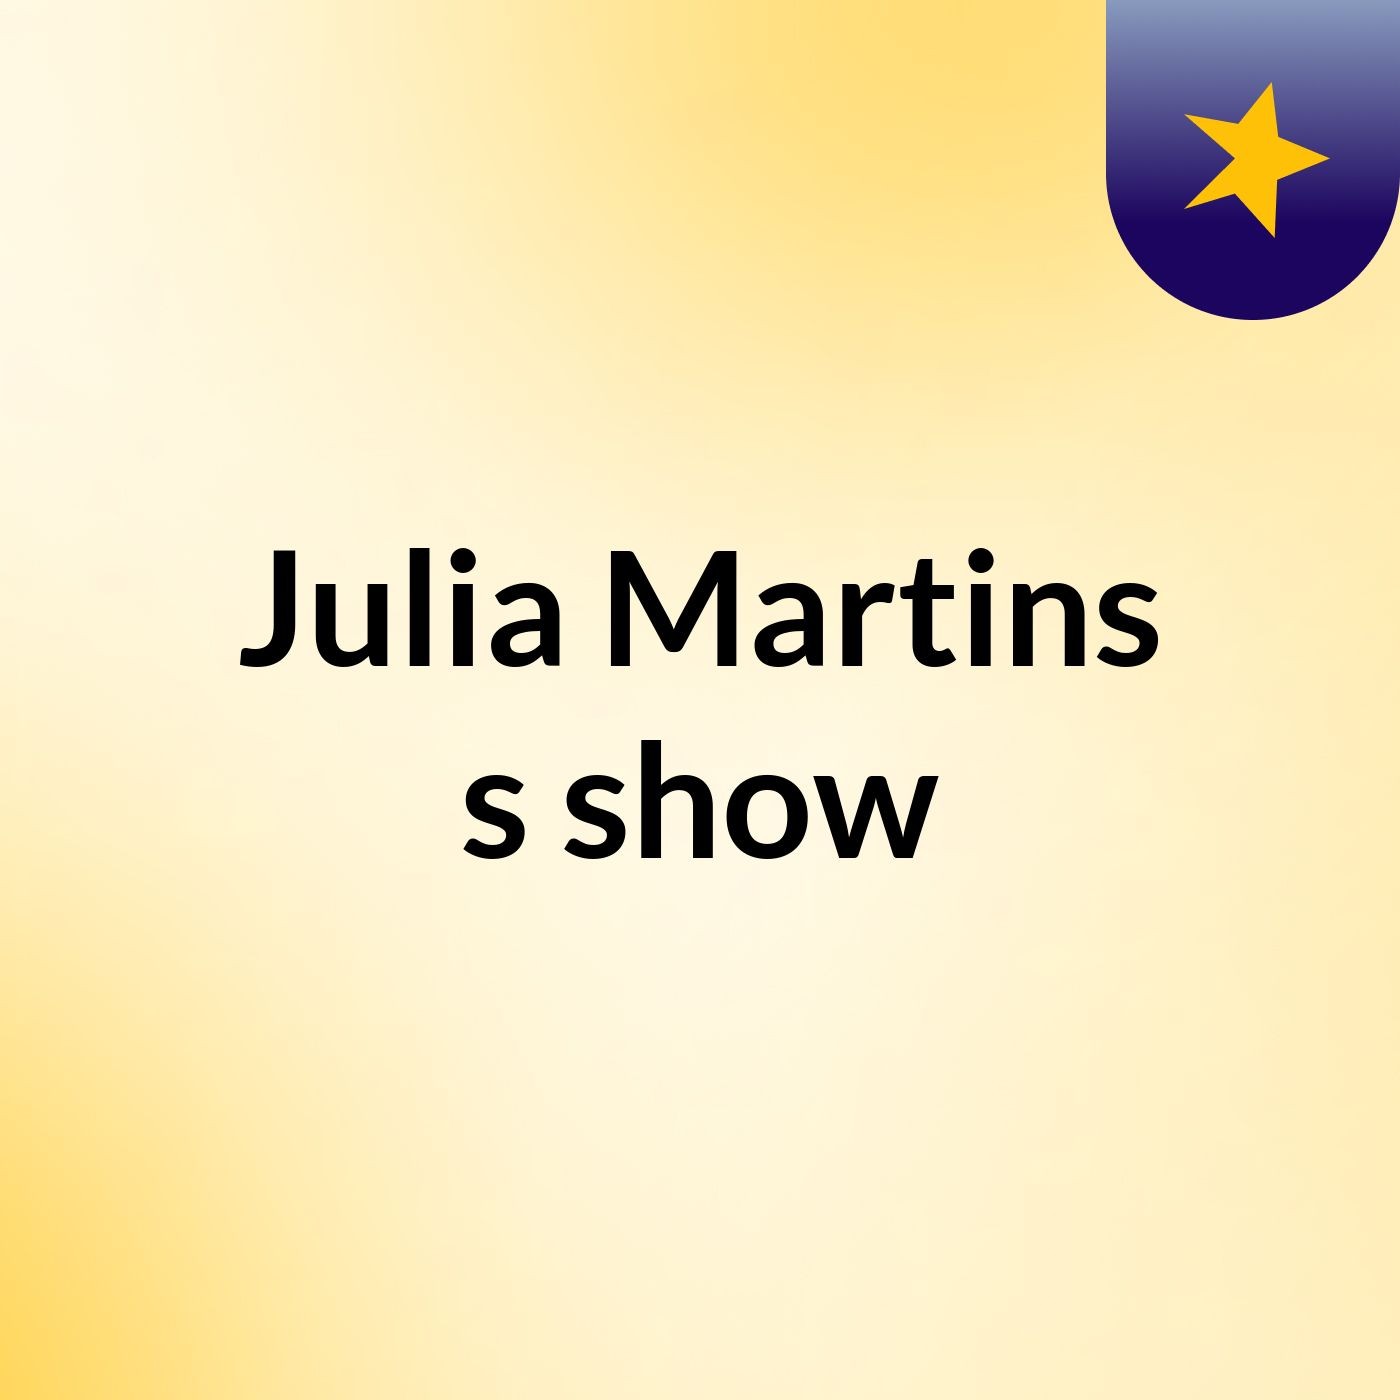 Julia Martins's show